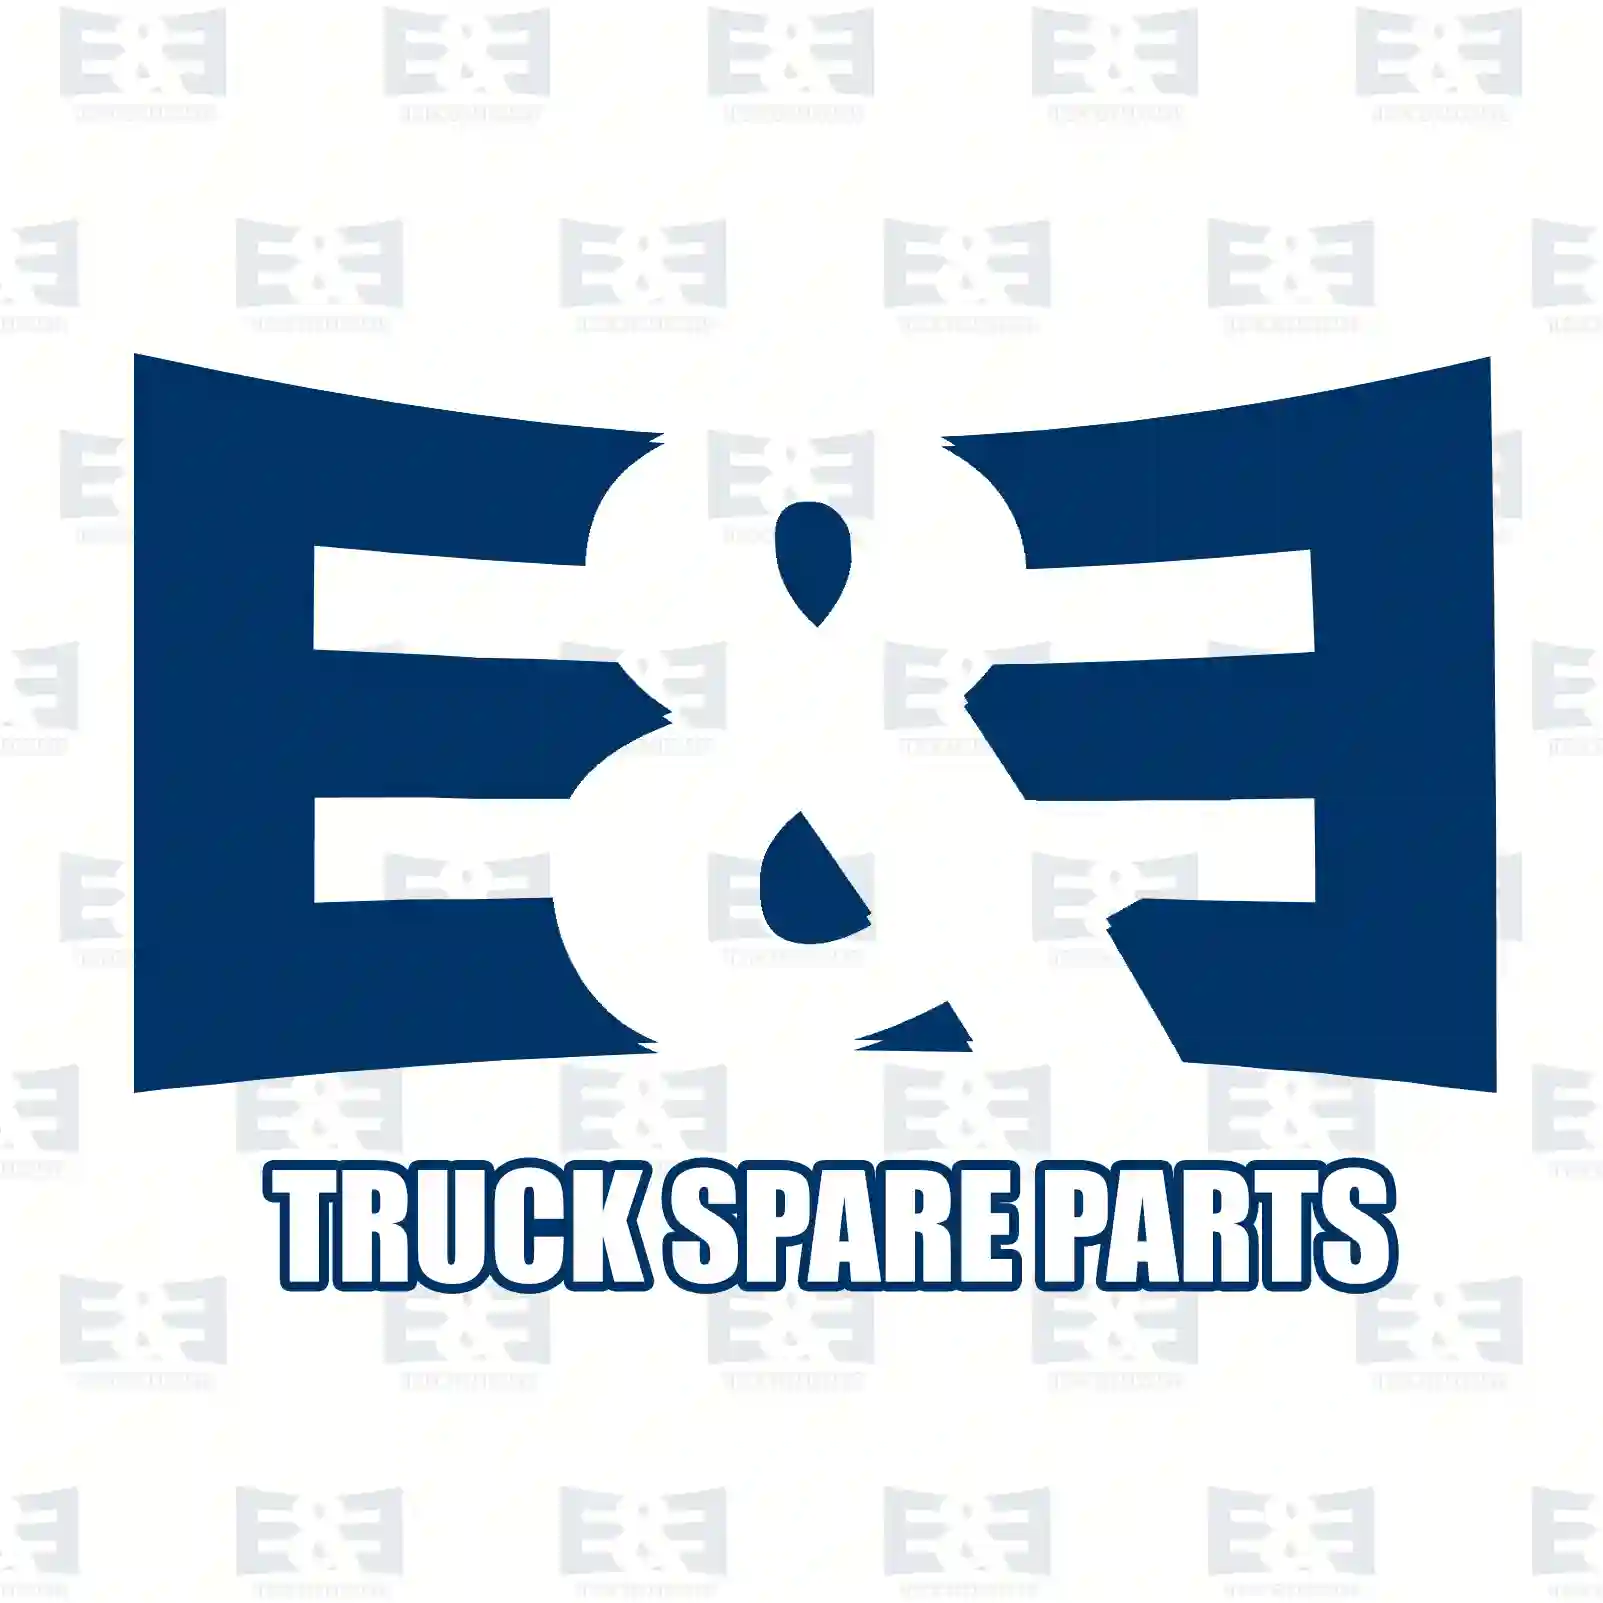 Ball bearing, 2E2201483, 06314890075, 51934100075, ||  2E2201483 E&E Truck Spare Parts | Truck Spare Parts, Auotomotive Spare Parts Ball bearing, 2E2201483, 06314890075, 51934100075, ||  2E2201483 E&E Truck Spare Parts | Truck Spare Parts, Auotomotive Spare Parts